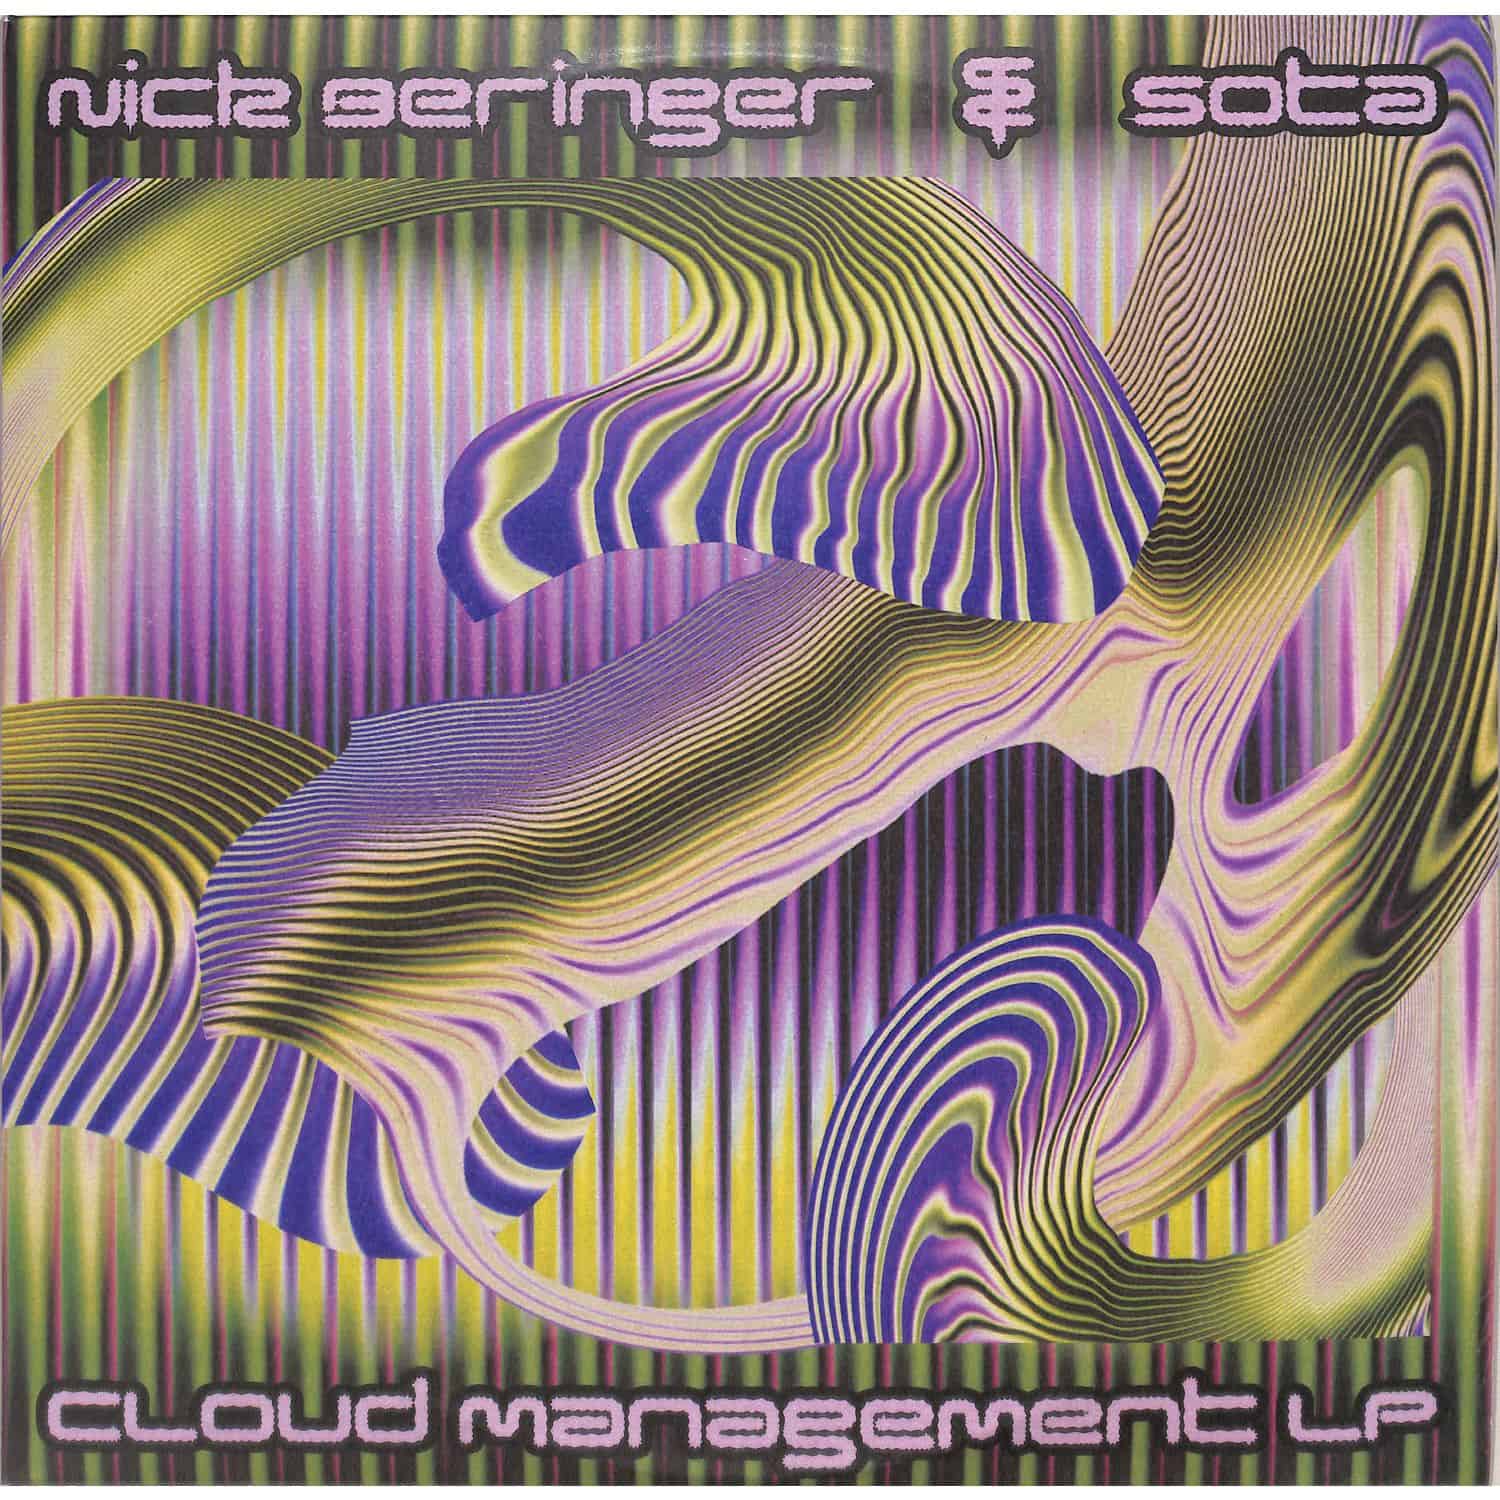 Nick Beringer & Sota - CLOUD MANAGEMENT 